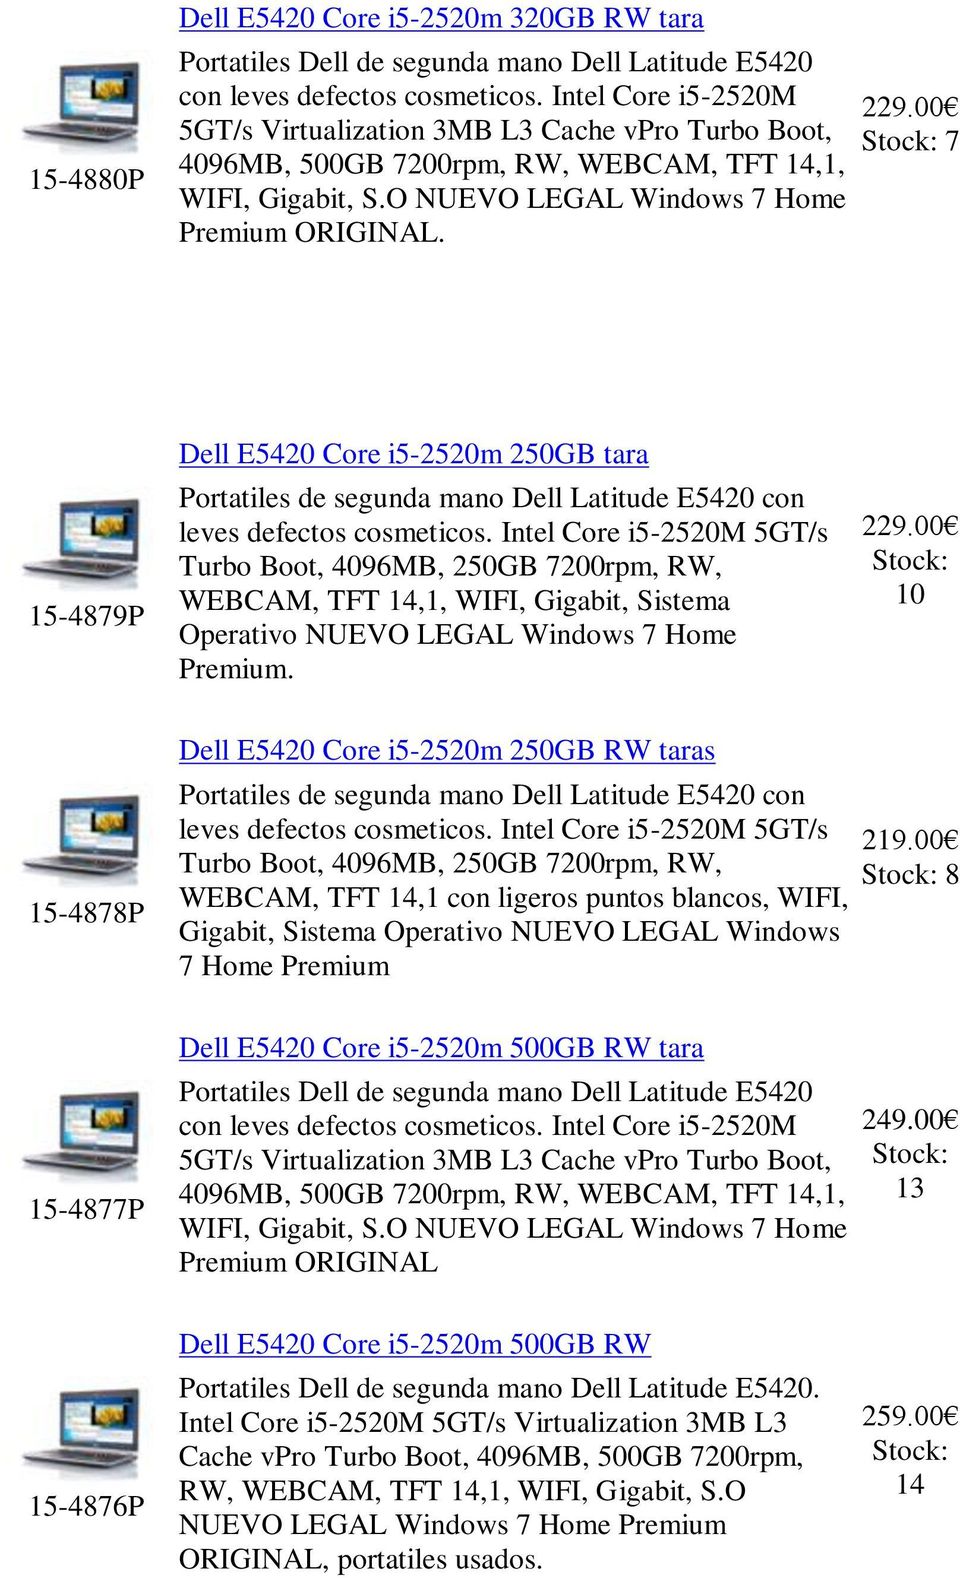 7 15-4879P Dell E5420 Core i5-2520m 250GB tara Portatiles de segunda mano Dell Latitude E5420 con leves defectos cosmeticos.